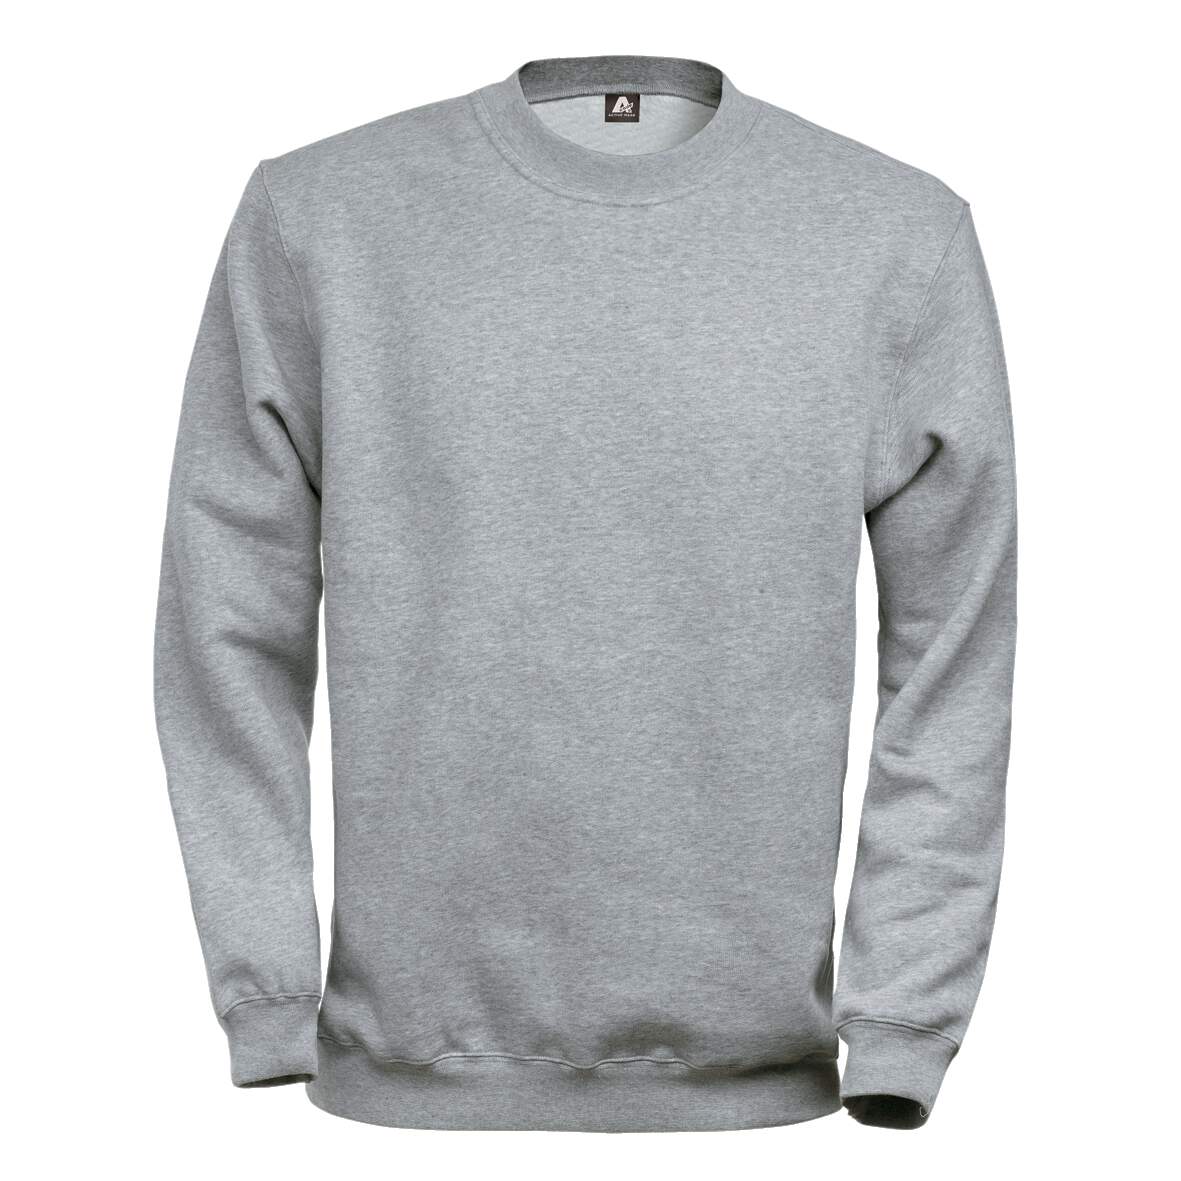 1181270 - Sweatshirt grau meliert 100225